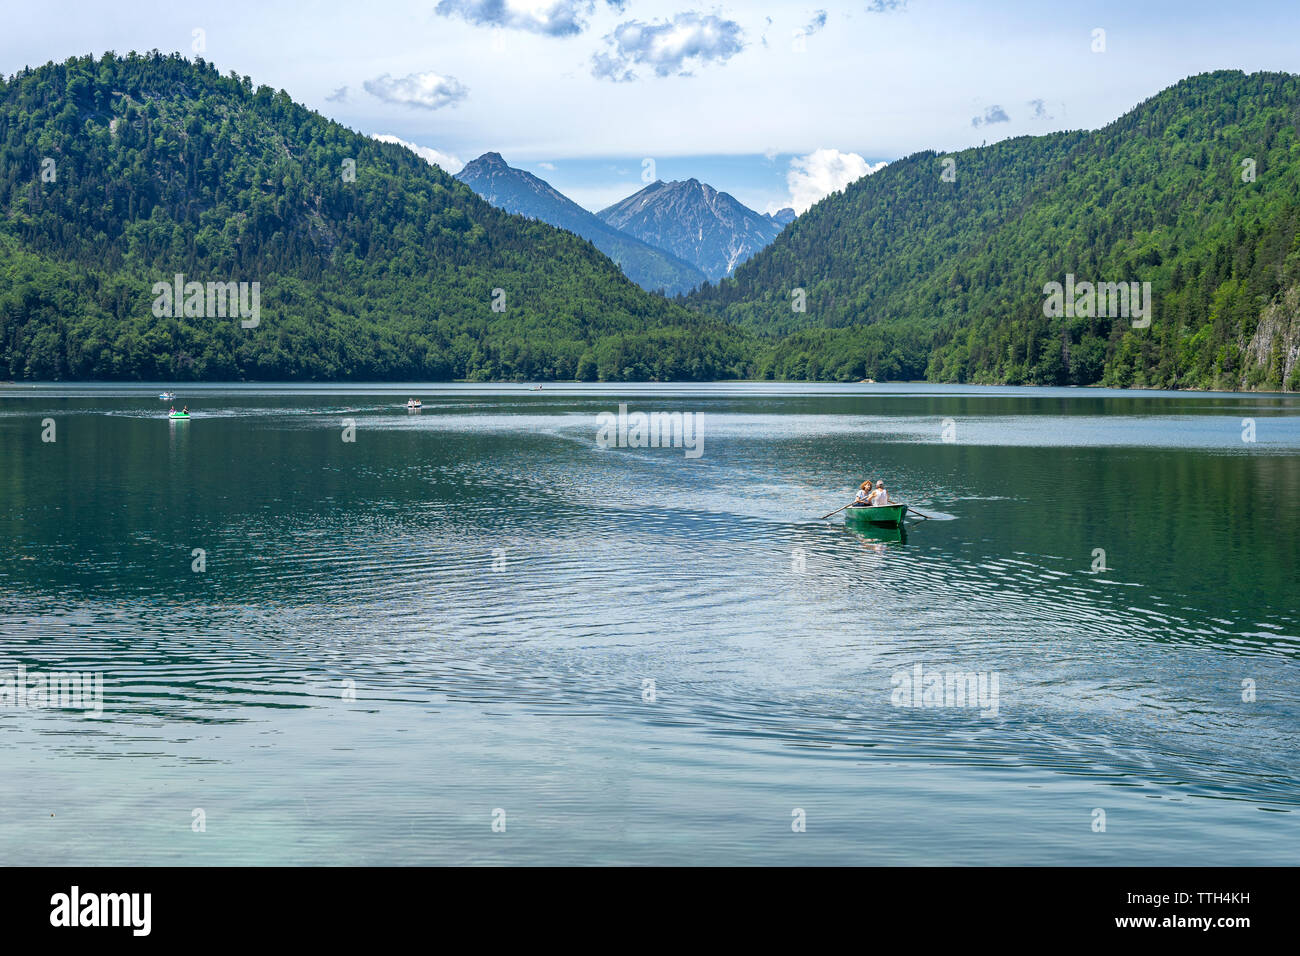 Couple crossing mountain lake Alpsee sur une barque Banque D'Images